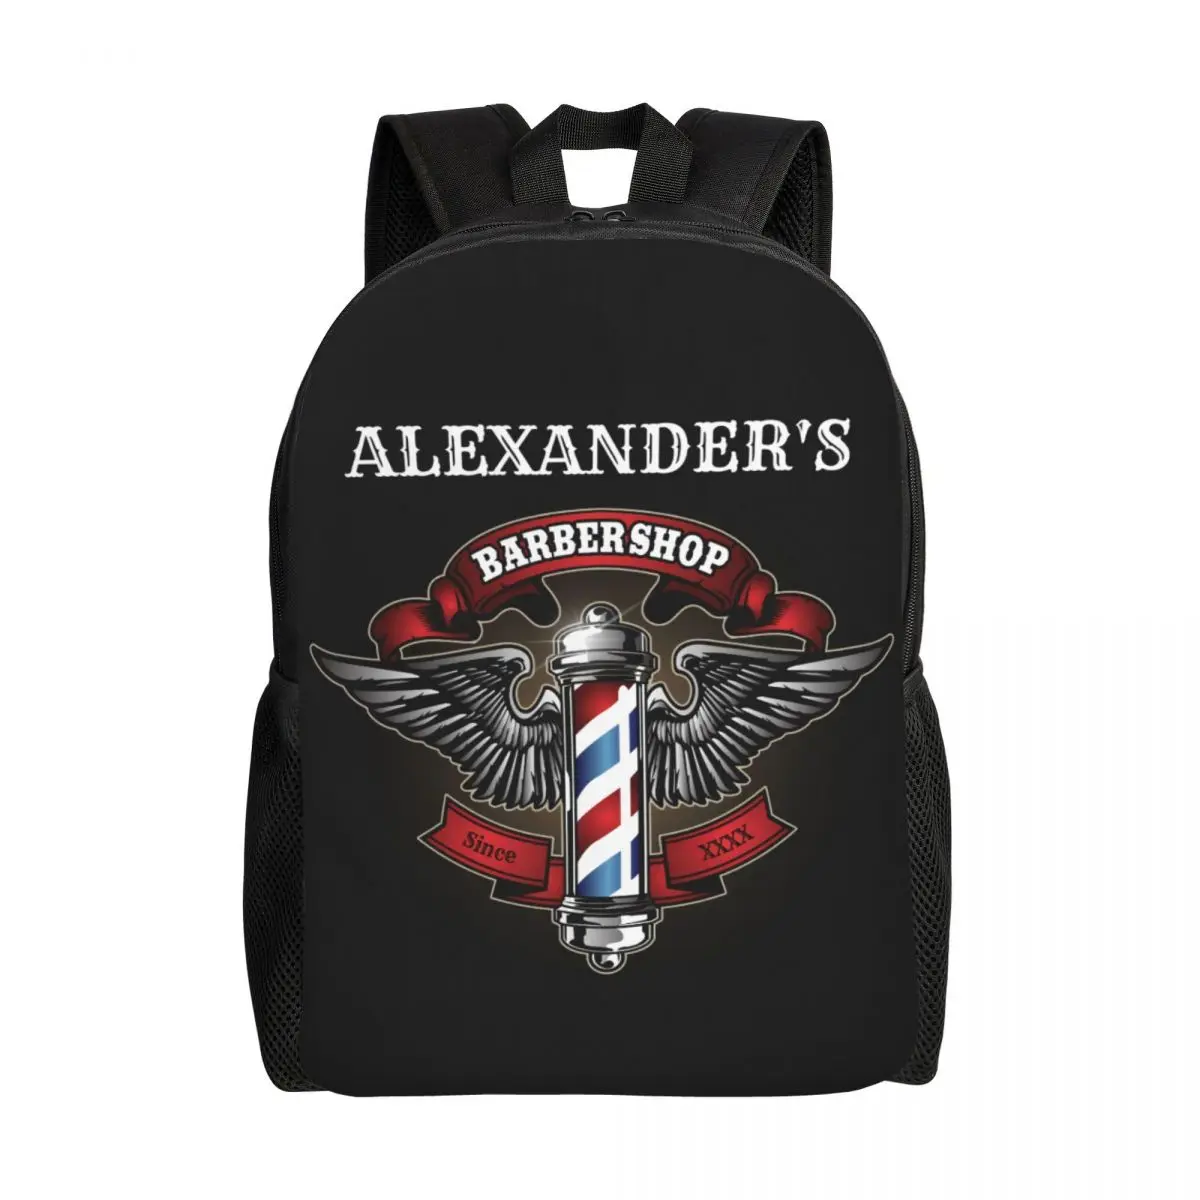 

Winged Barber Pole Coaster Backpacks for Men Women School College Students Bookbag Fits 15 Inch Laptop Barbershop Bags